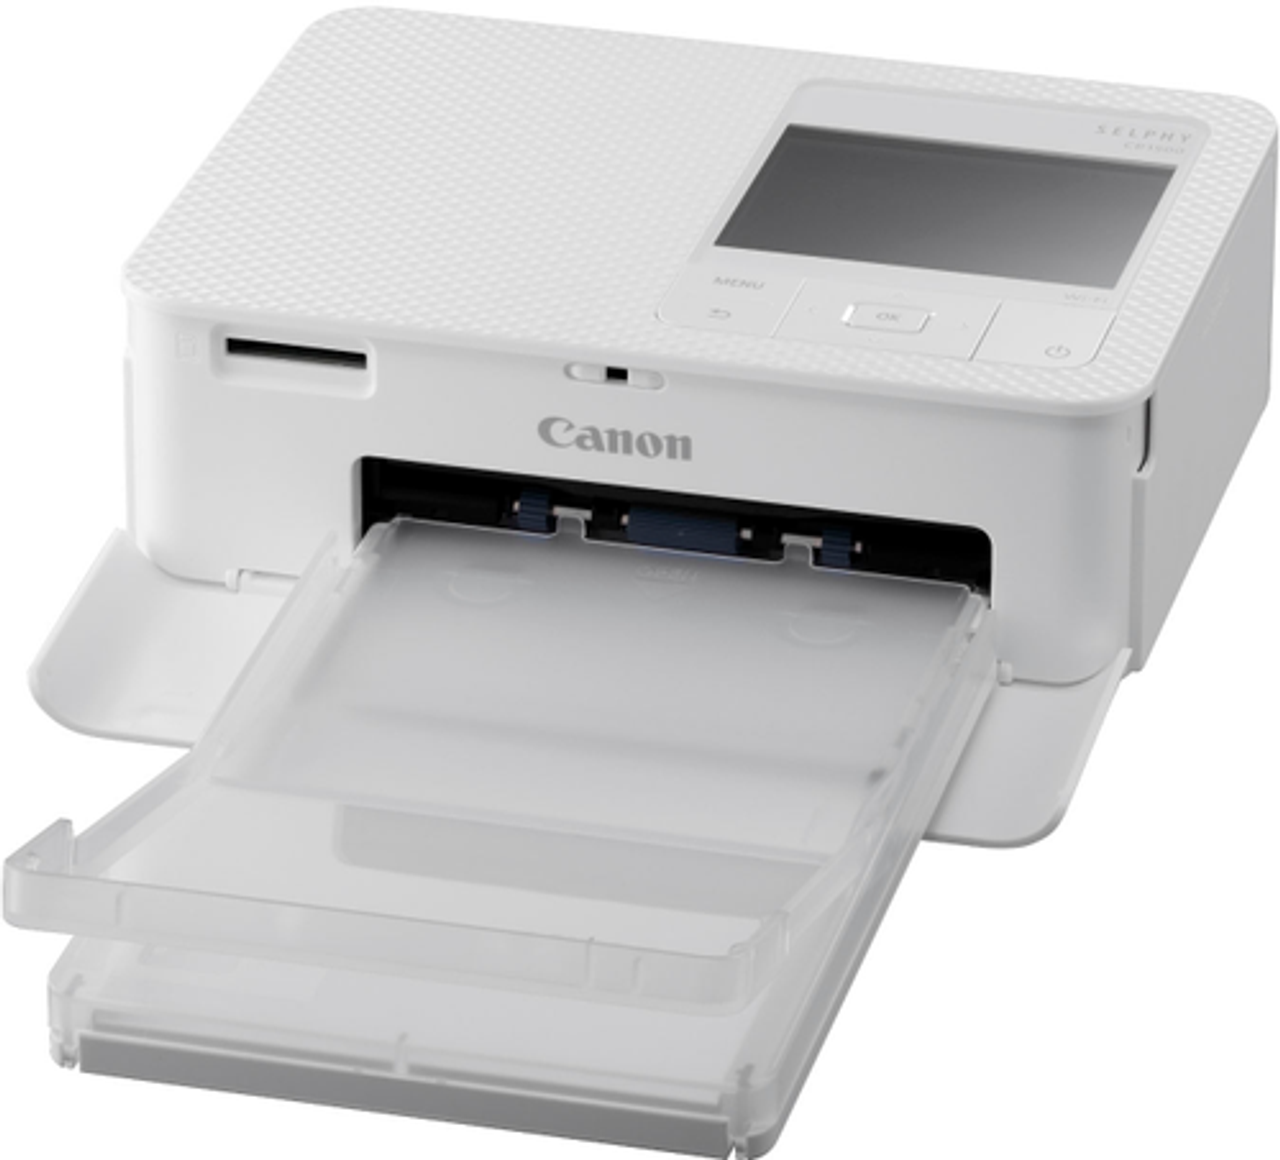 Canon - SELPHY CP1500 Wireless Compact Photo Printer - White